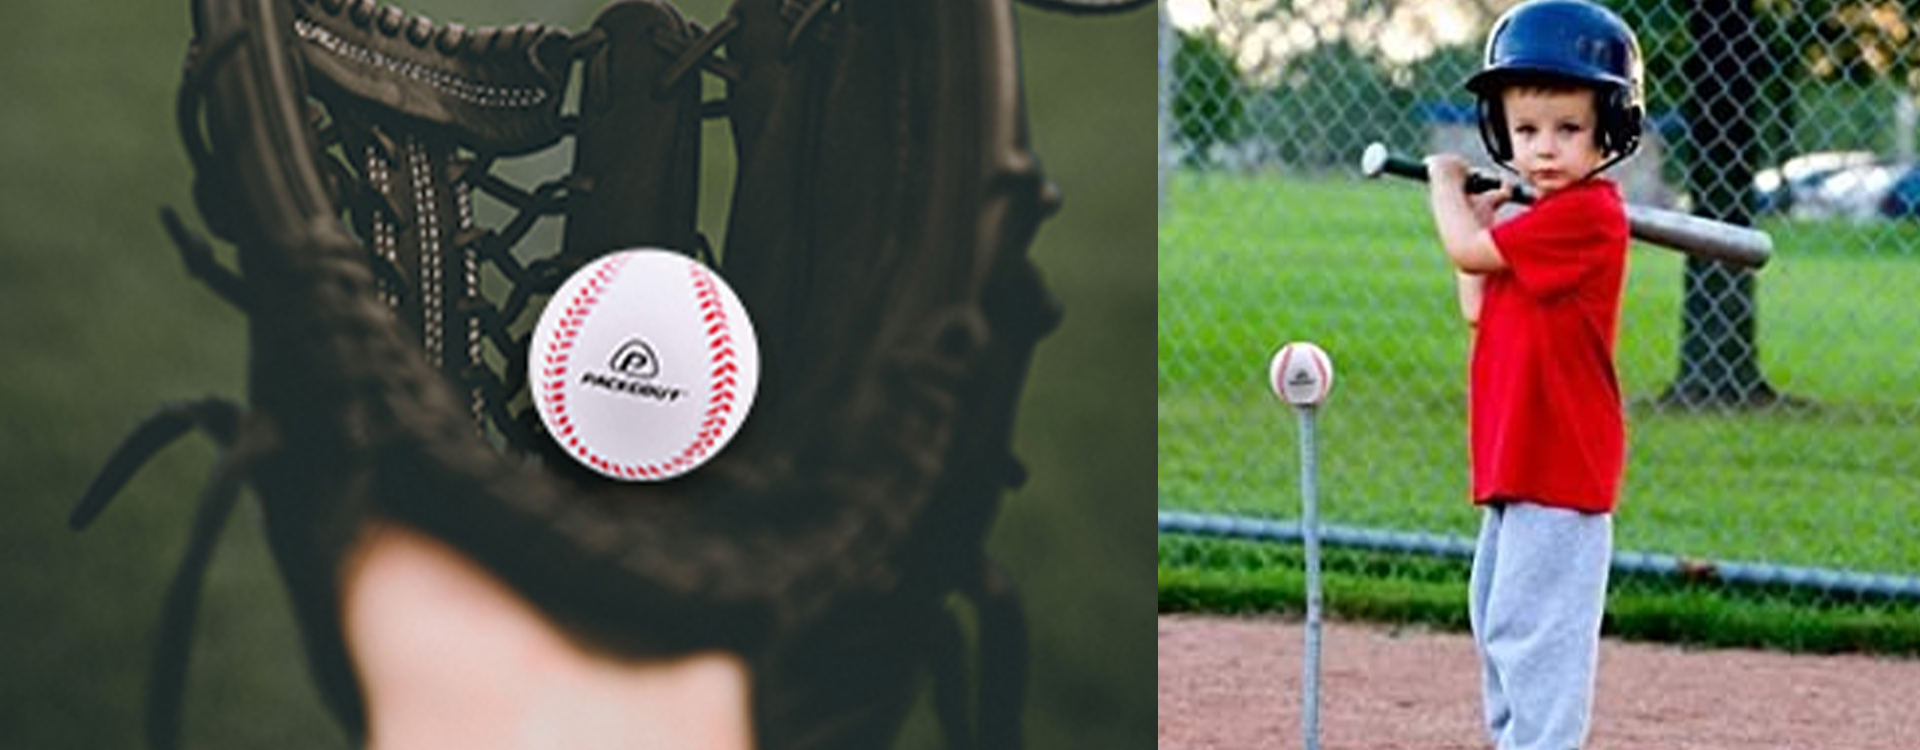 logo gifts no minimum cute sklz catapult soft toss baseball pitching and fielding machine supplier